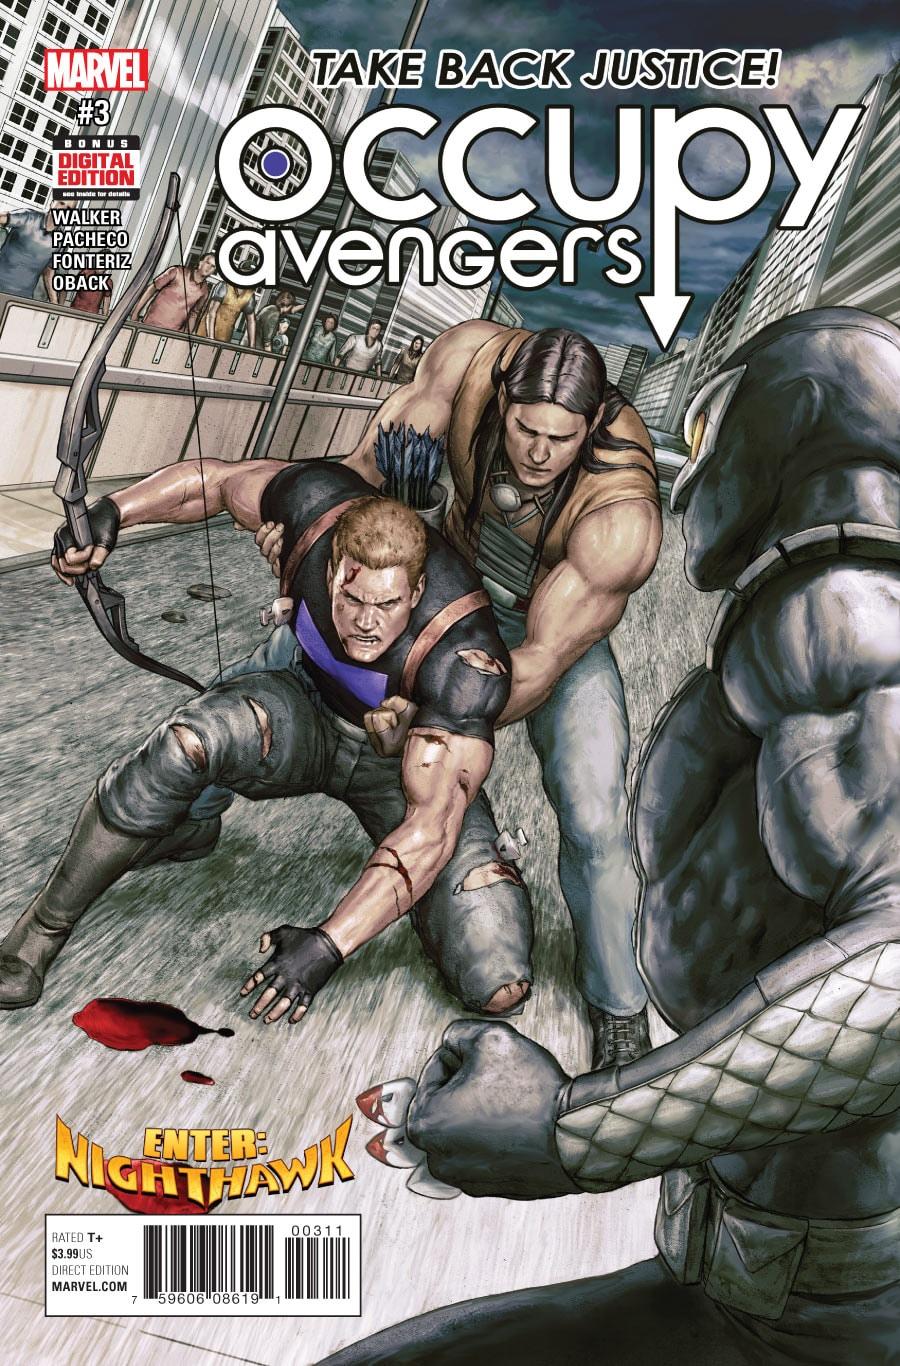 Occupy Avengers Vol. 1 #3